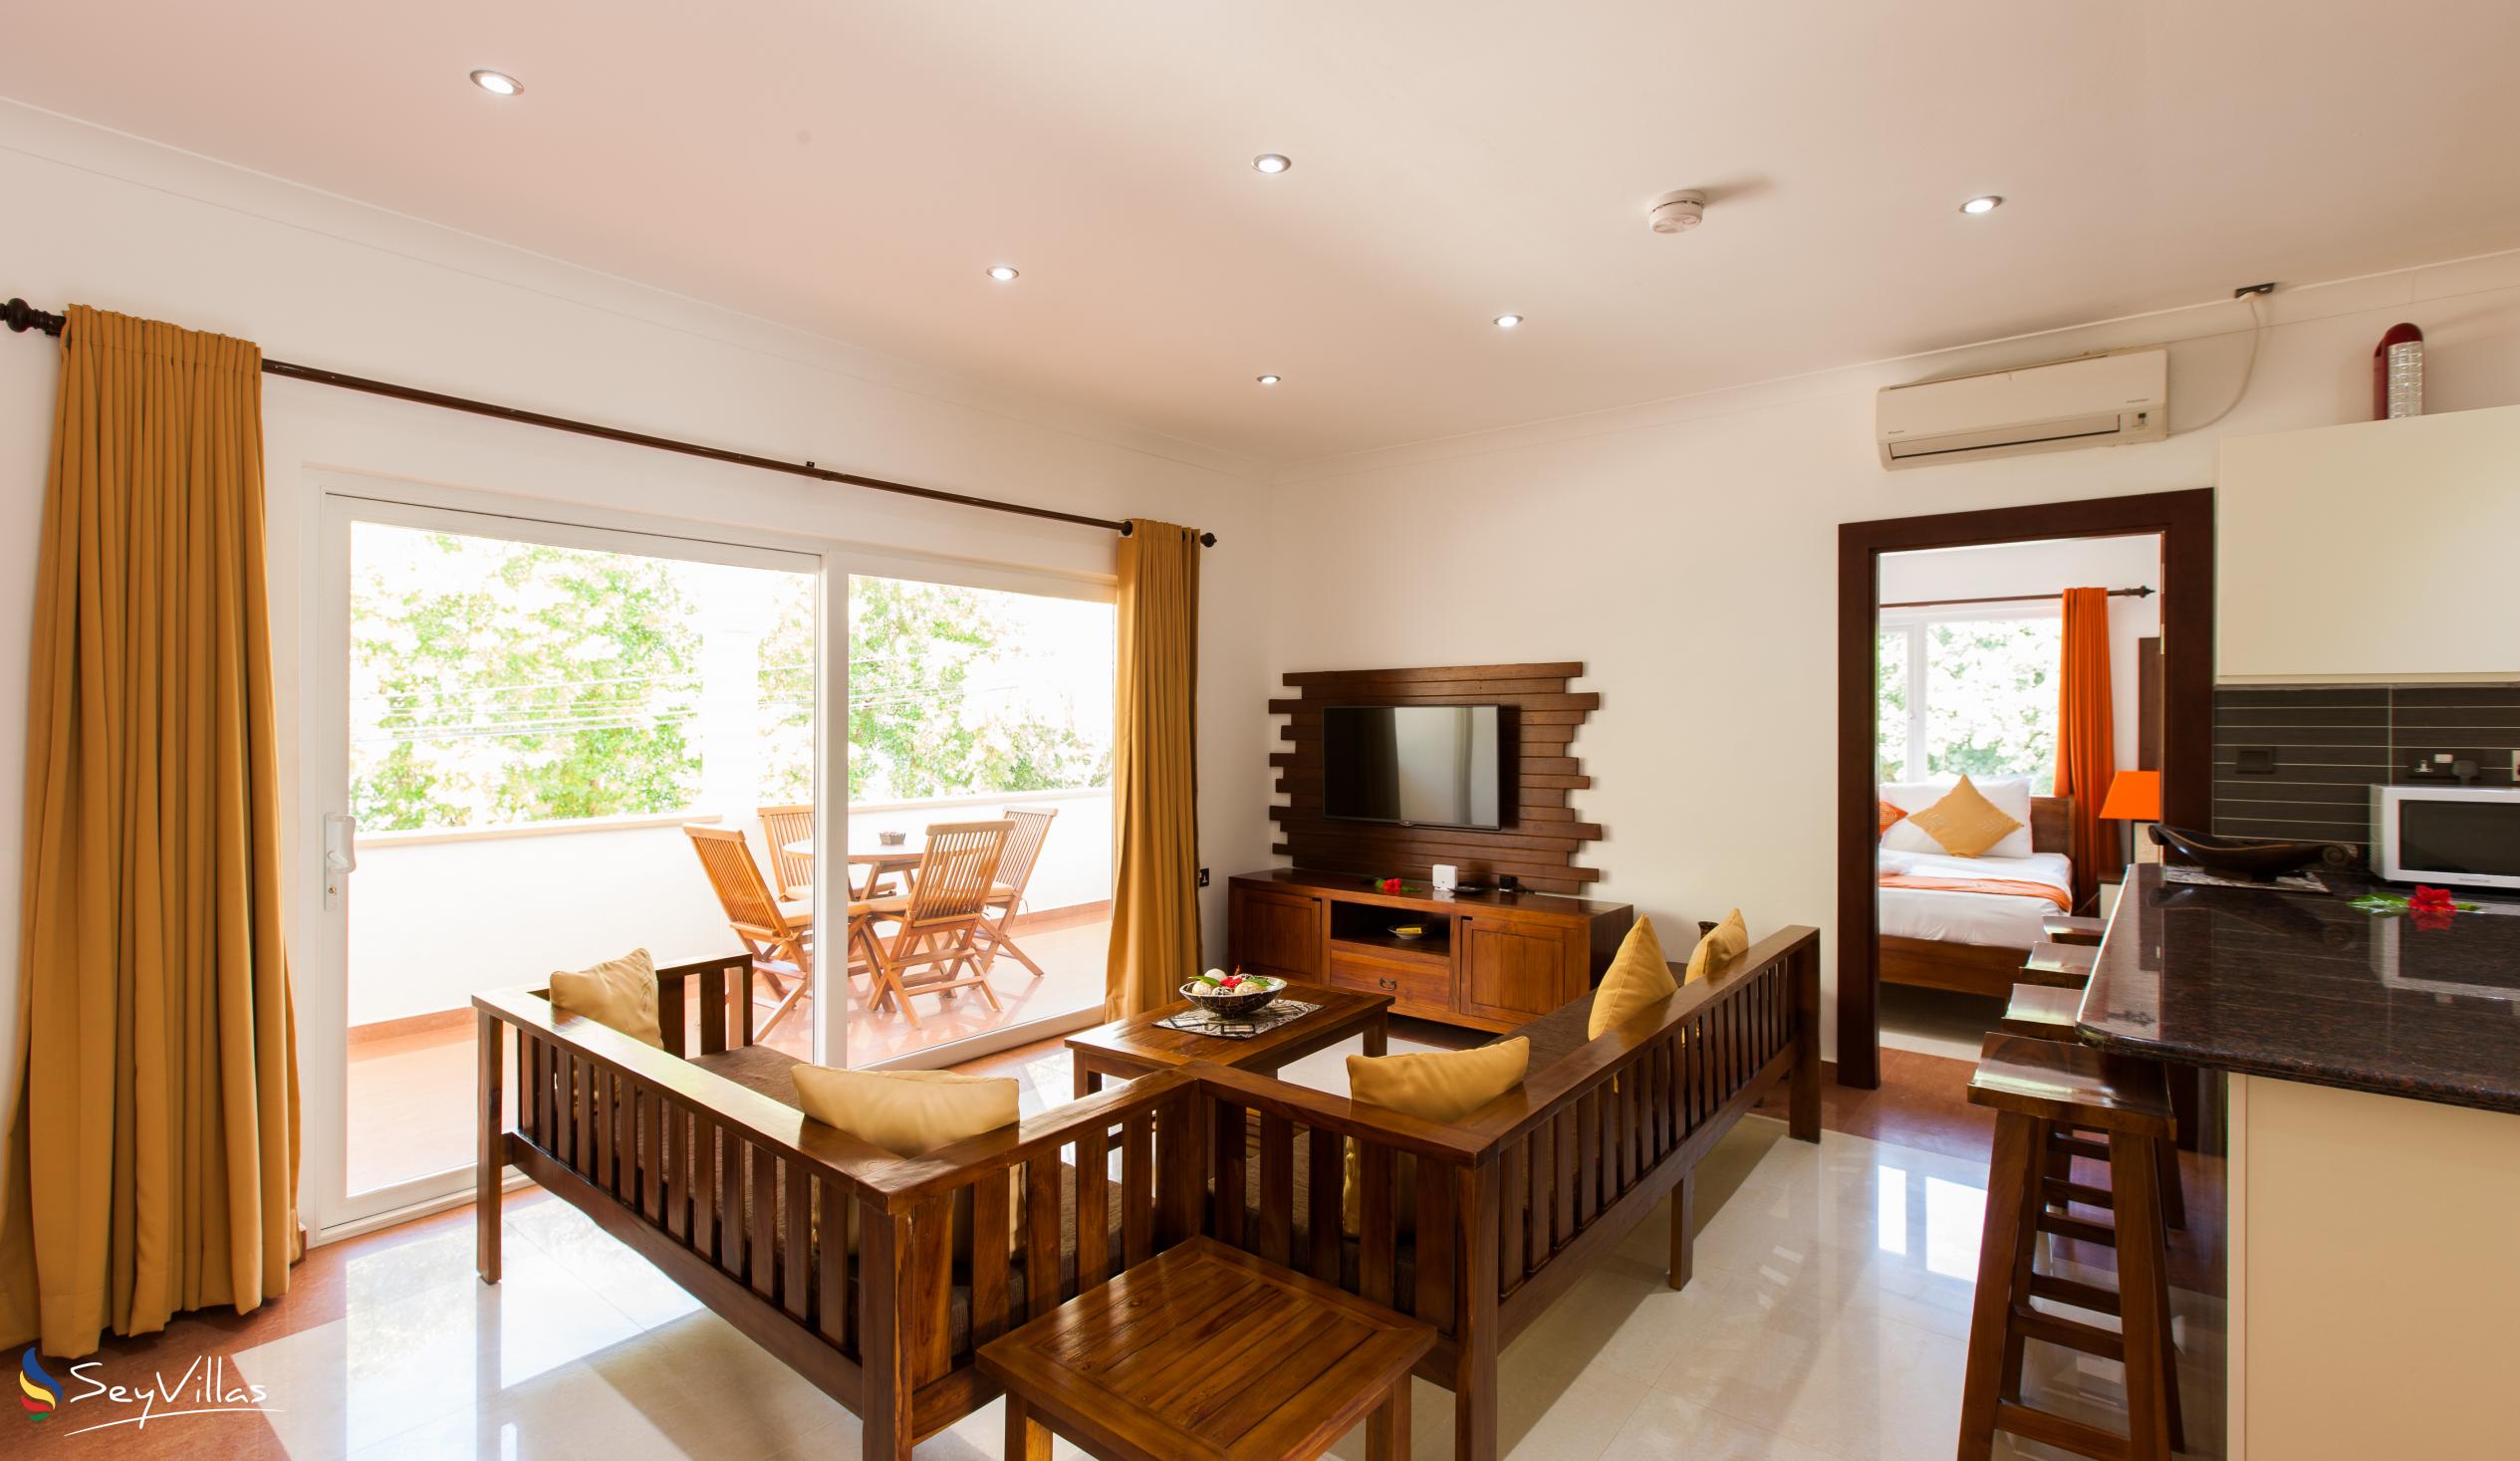 Photo 12: YASAD Luxury Beach Residence - 3-Bedroom Apartment - Praslin (Seychelles)